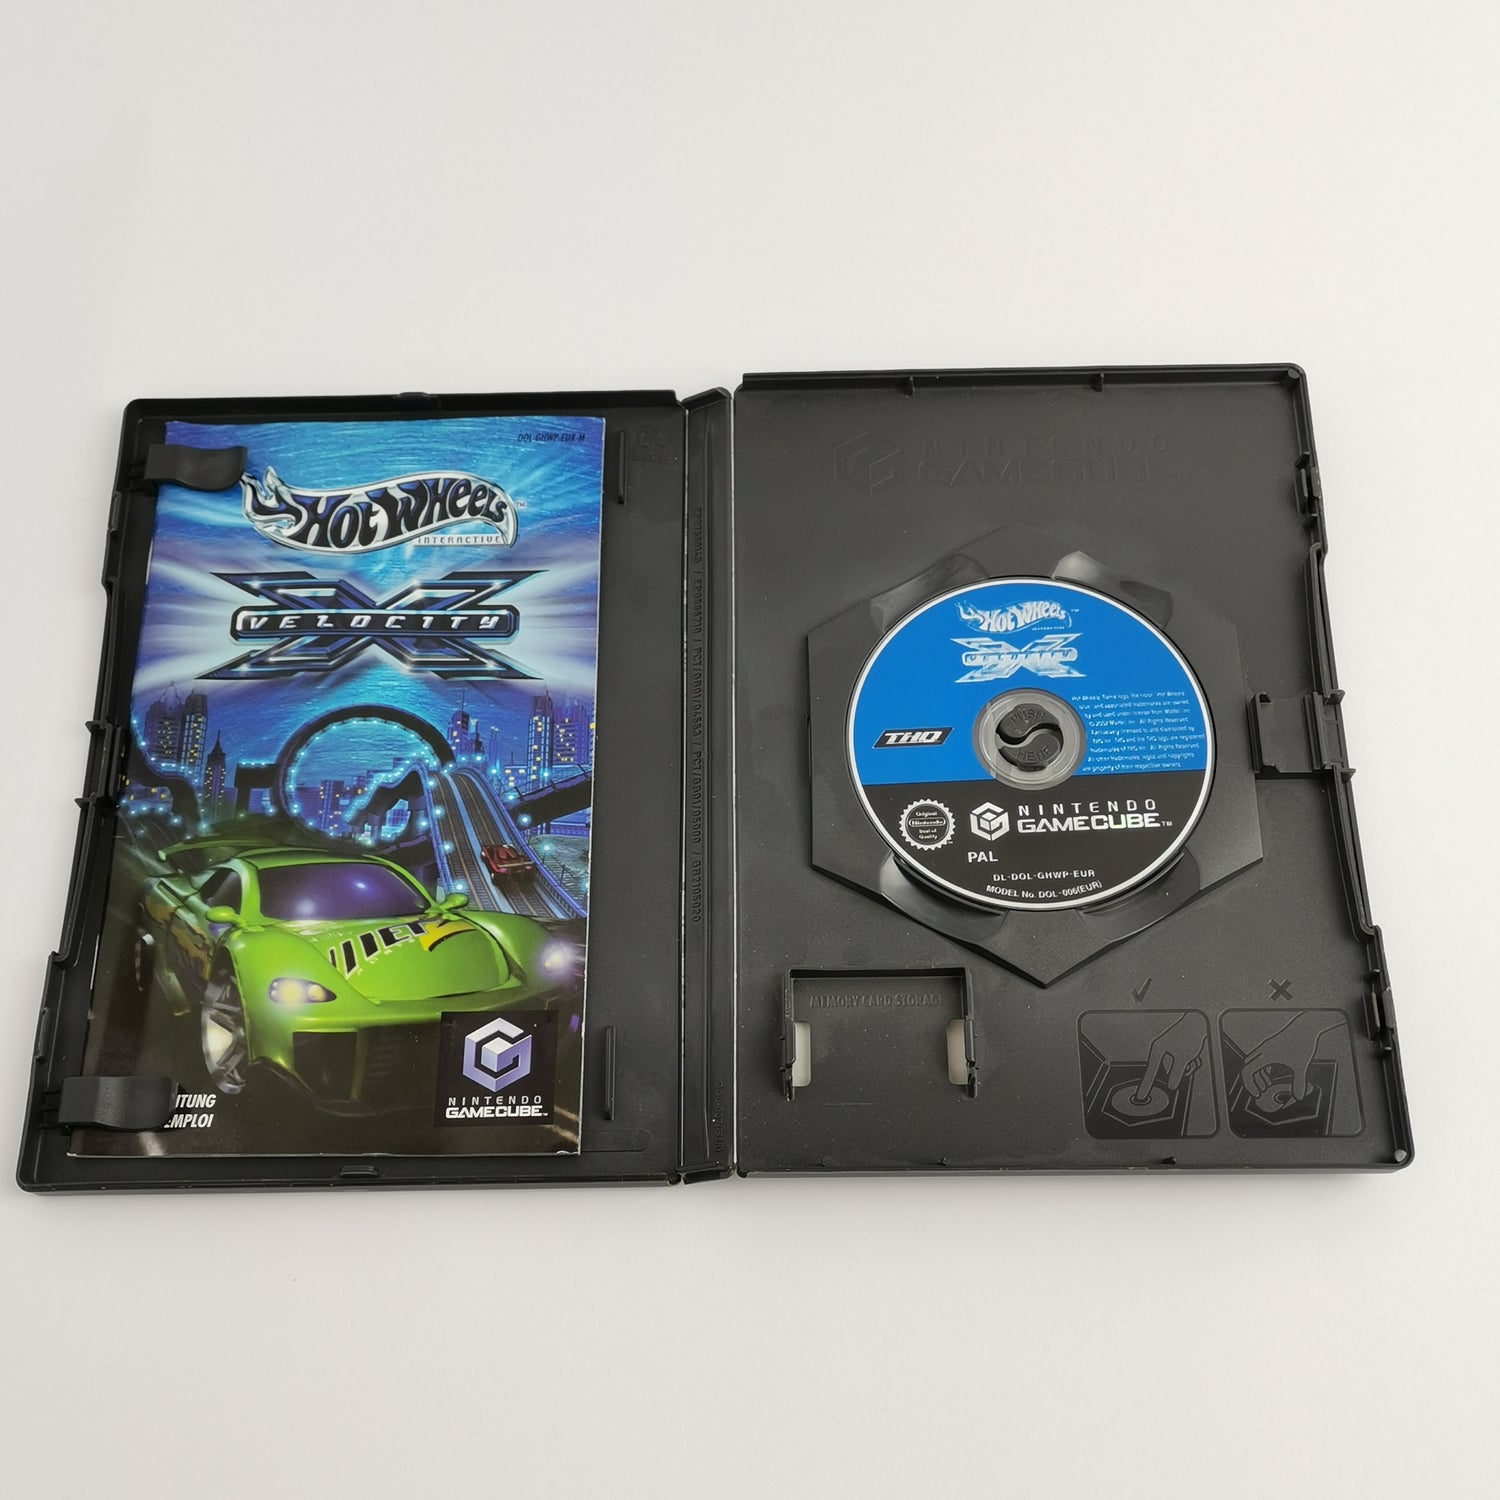 Nintendo Gamecube Game: Hot Wheels Interactive Velocity | PAL version - original packaging